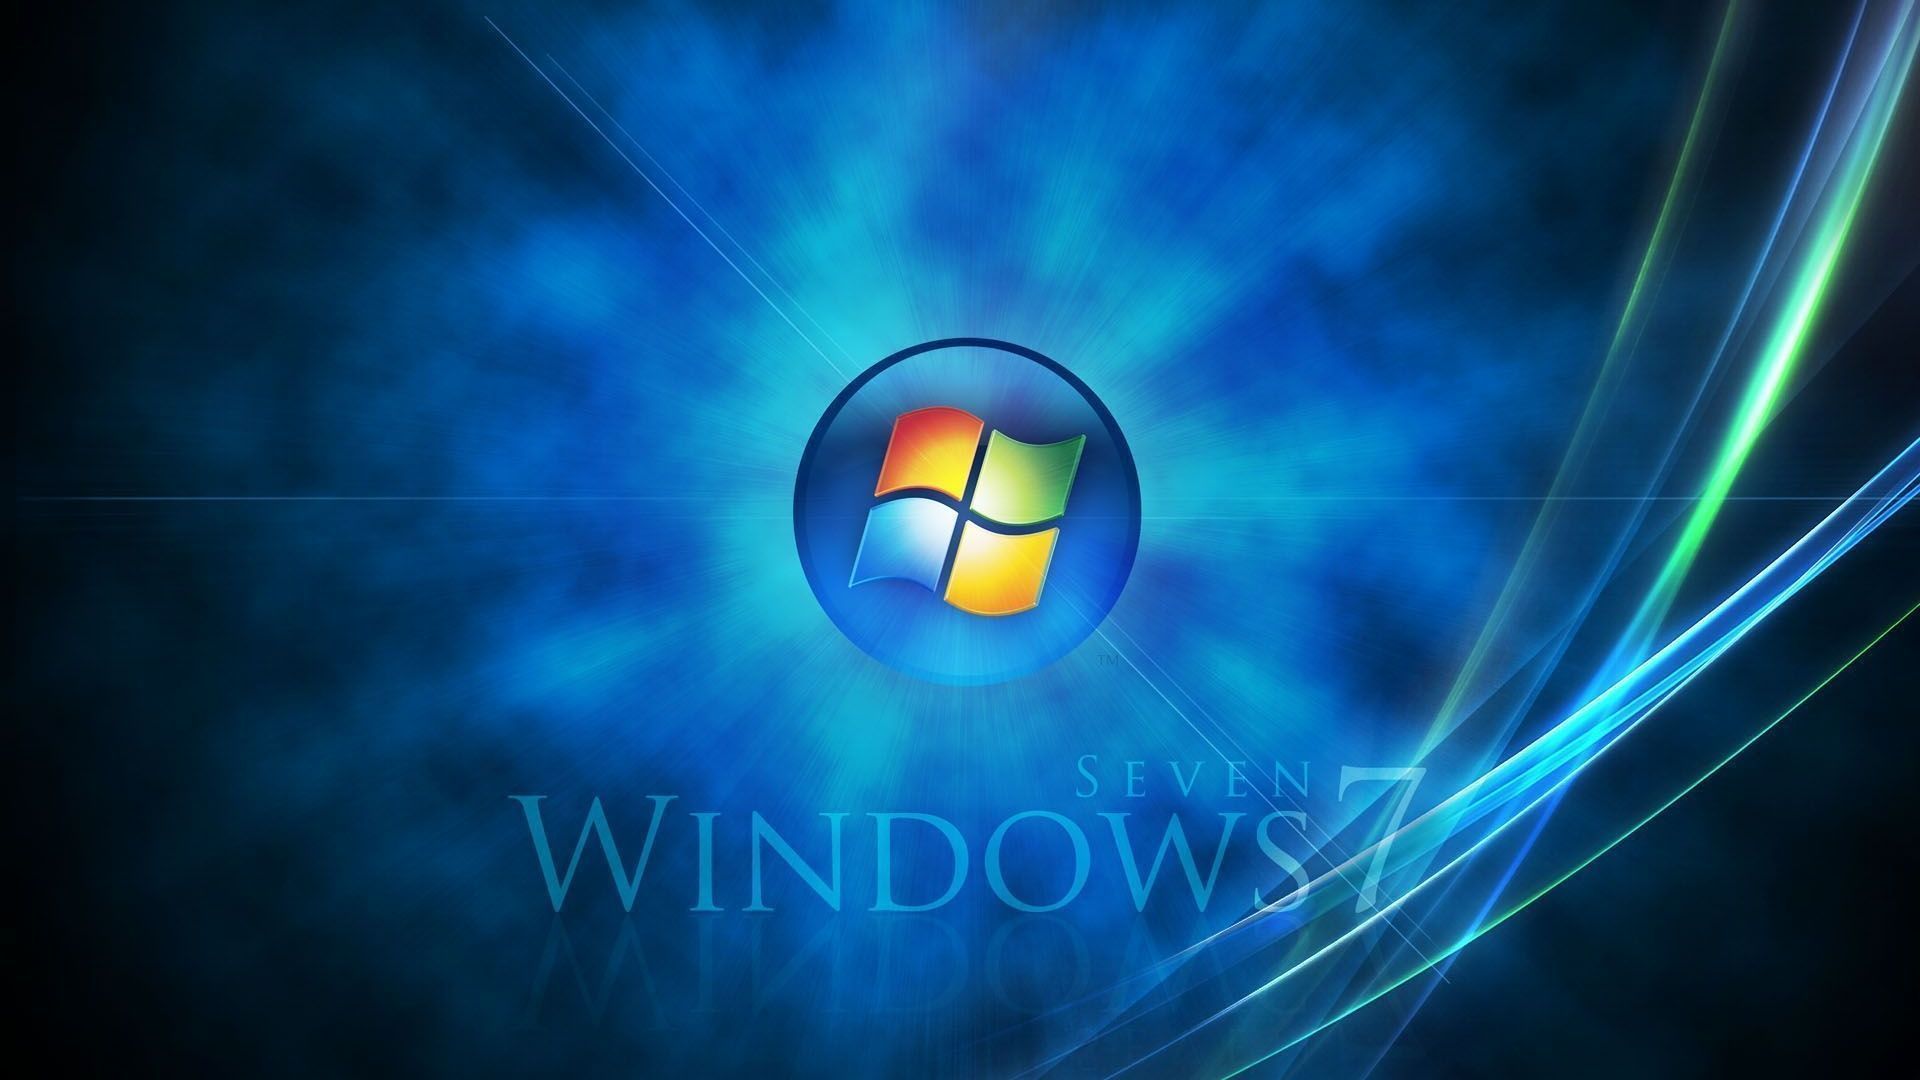 Windows_7_Hd_Wallpaper_1920X1080-5.jpg